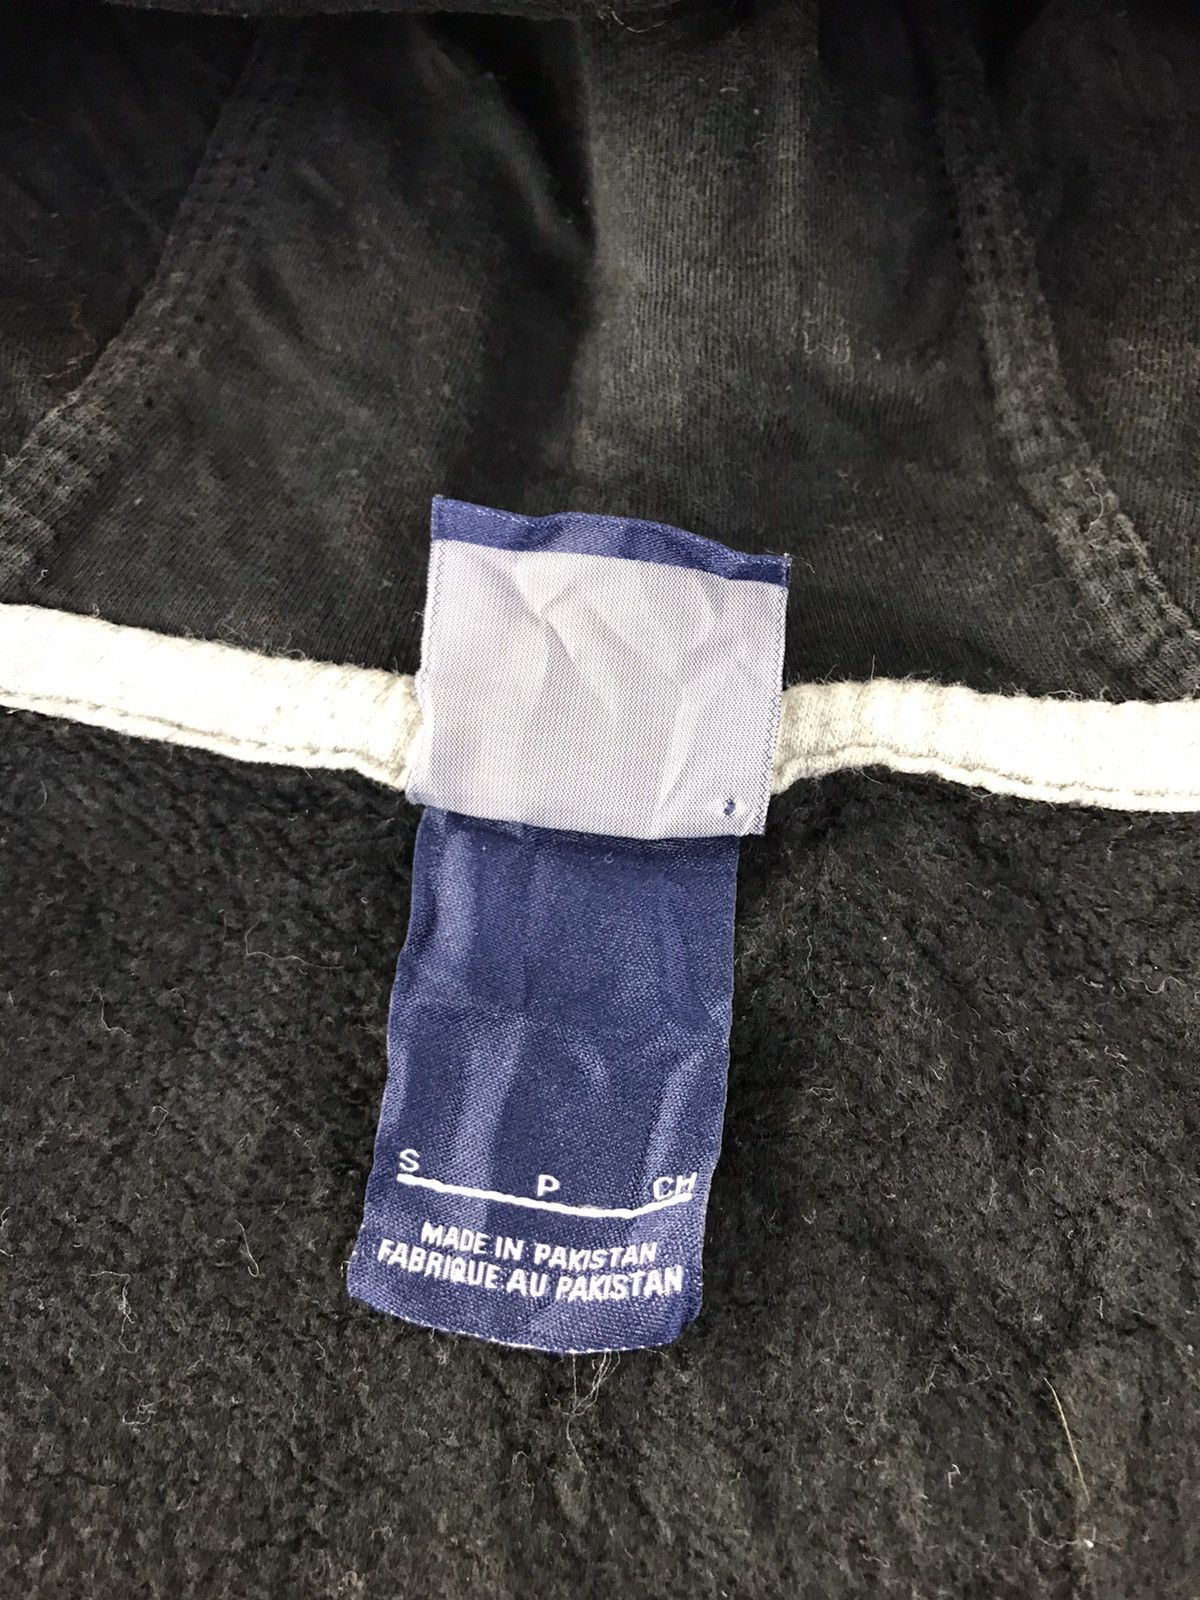 Nike Nike Marathon Finisher Student Run LA Hoodies Jacket Zip Up Size US M / EU 48-50 / 2 - 9 Thumbnail